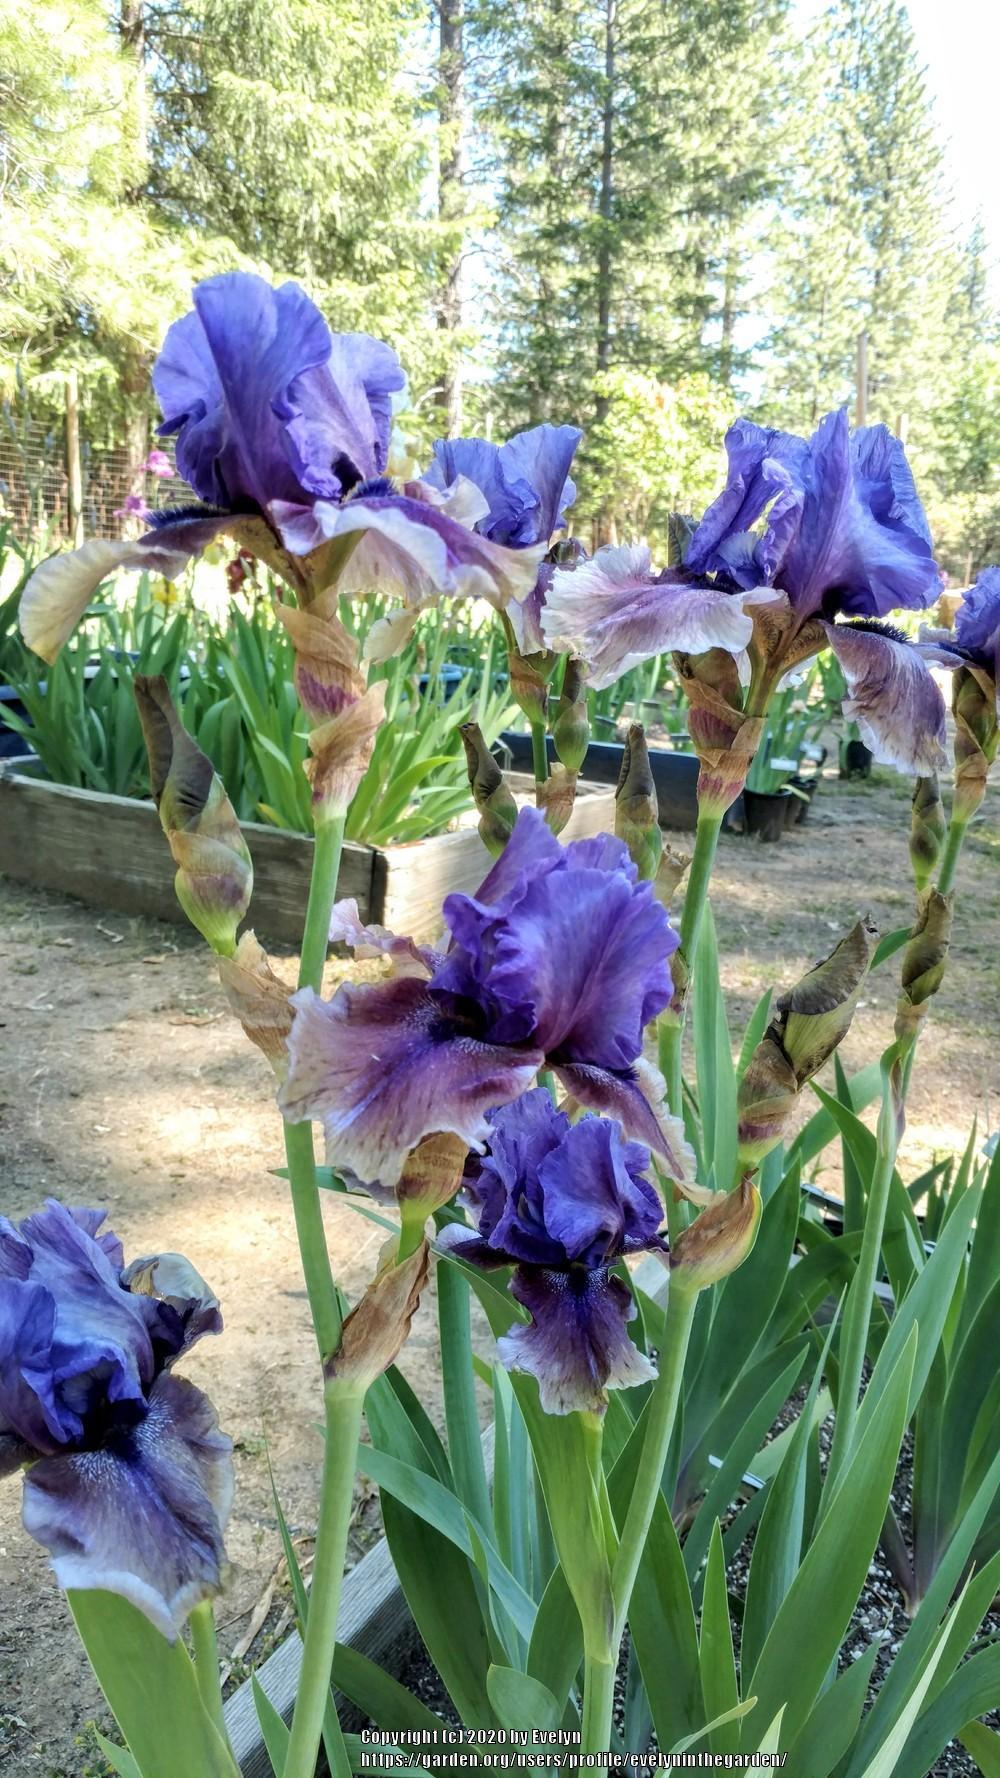 Photo of Tall Bearded Iris (Iris 'Comic Opera') uploaded by evelyninthegarden